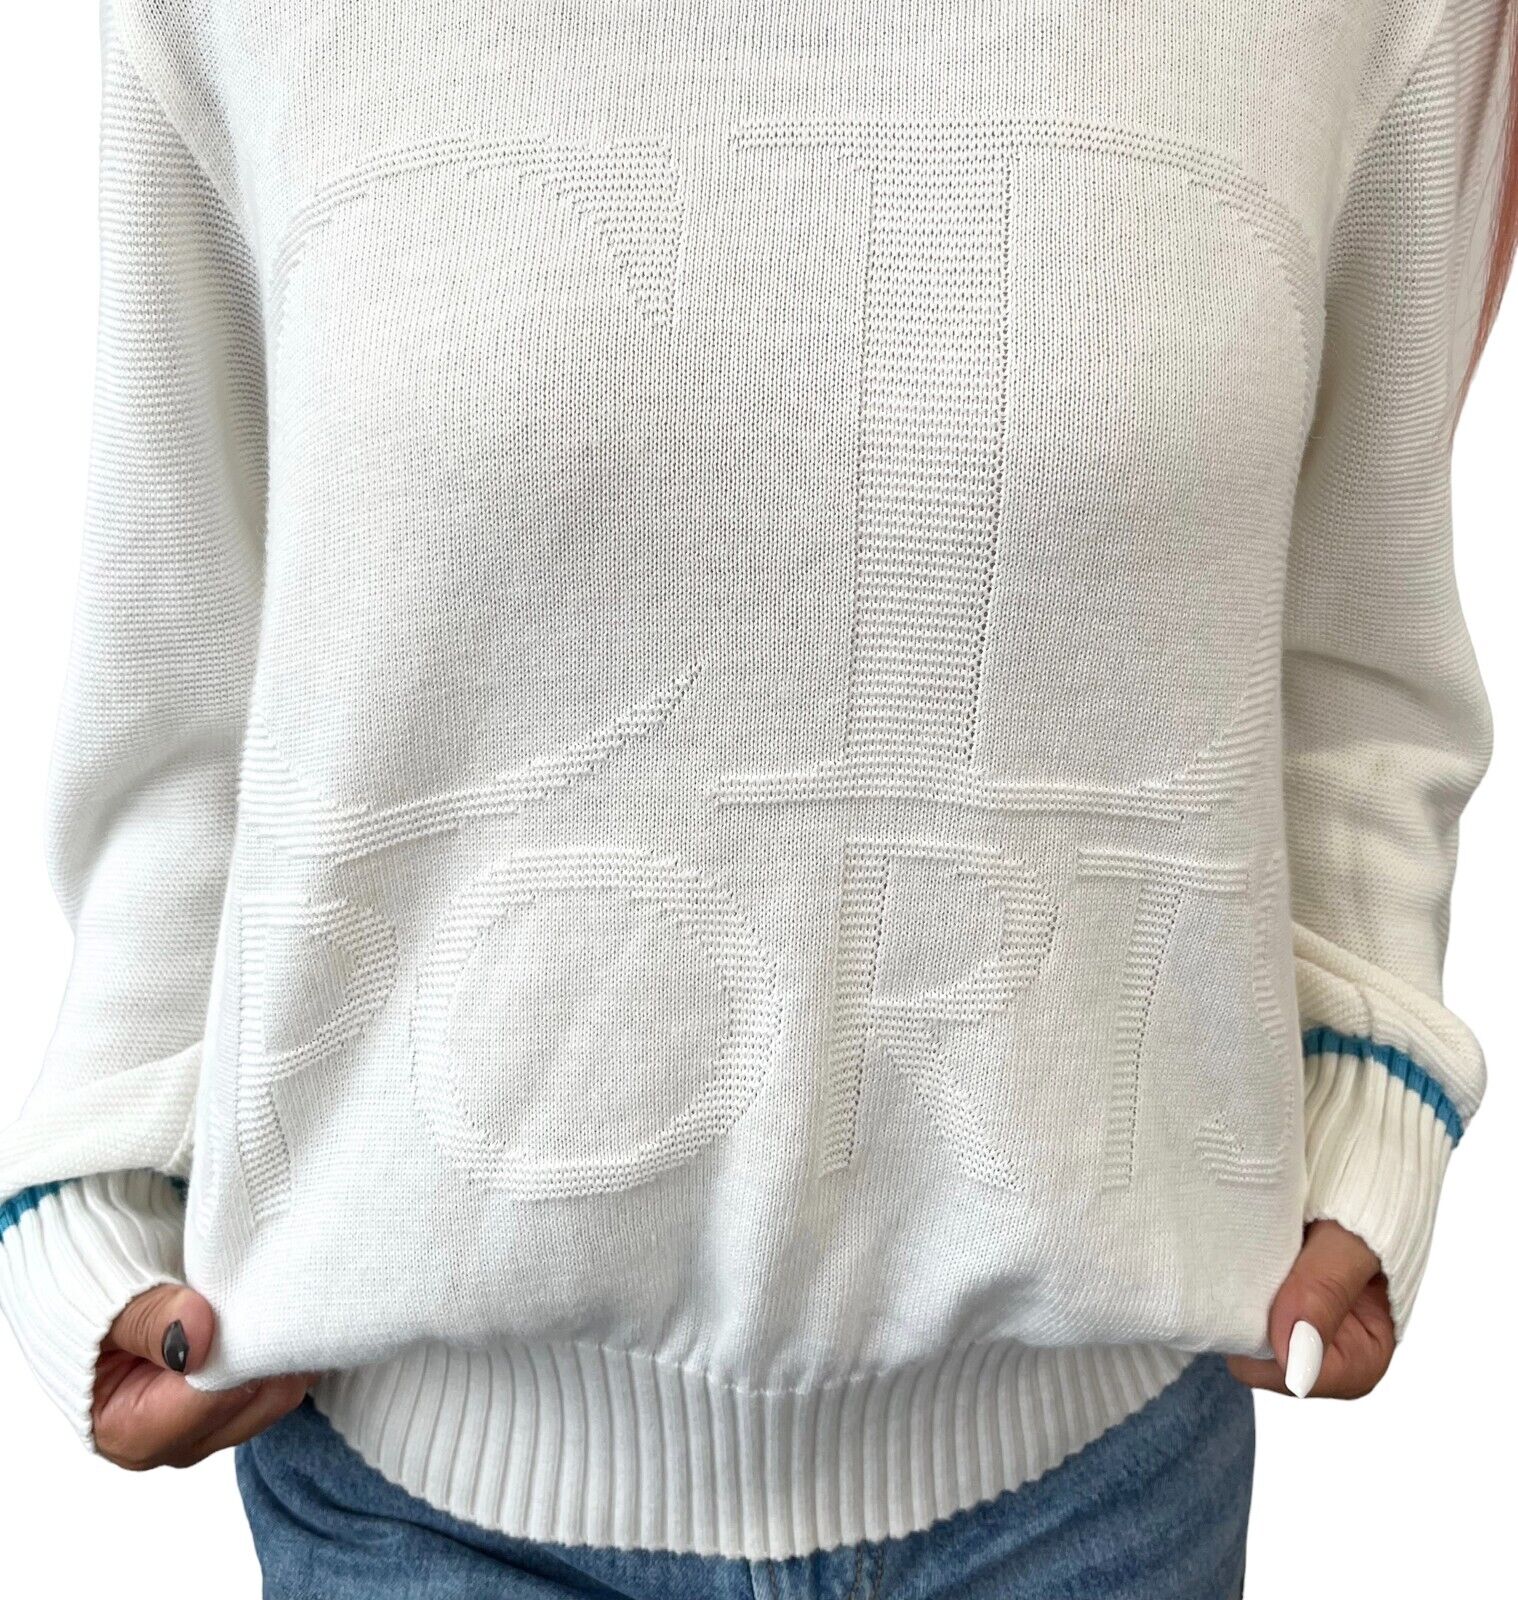 Christian Dior Sport Vintage Big Logo Knit Top #L Pullover White Cotton RankAB+